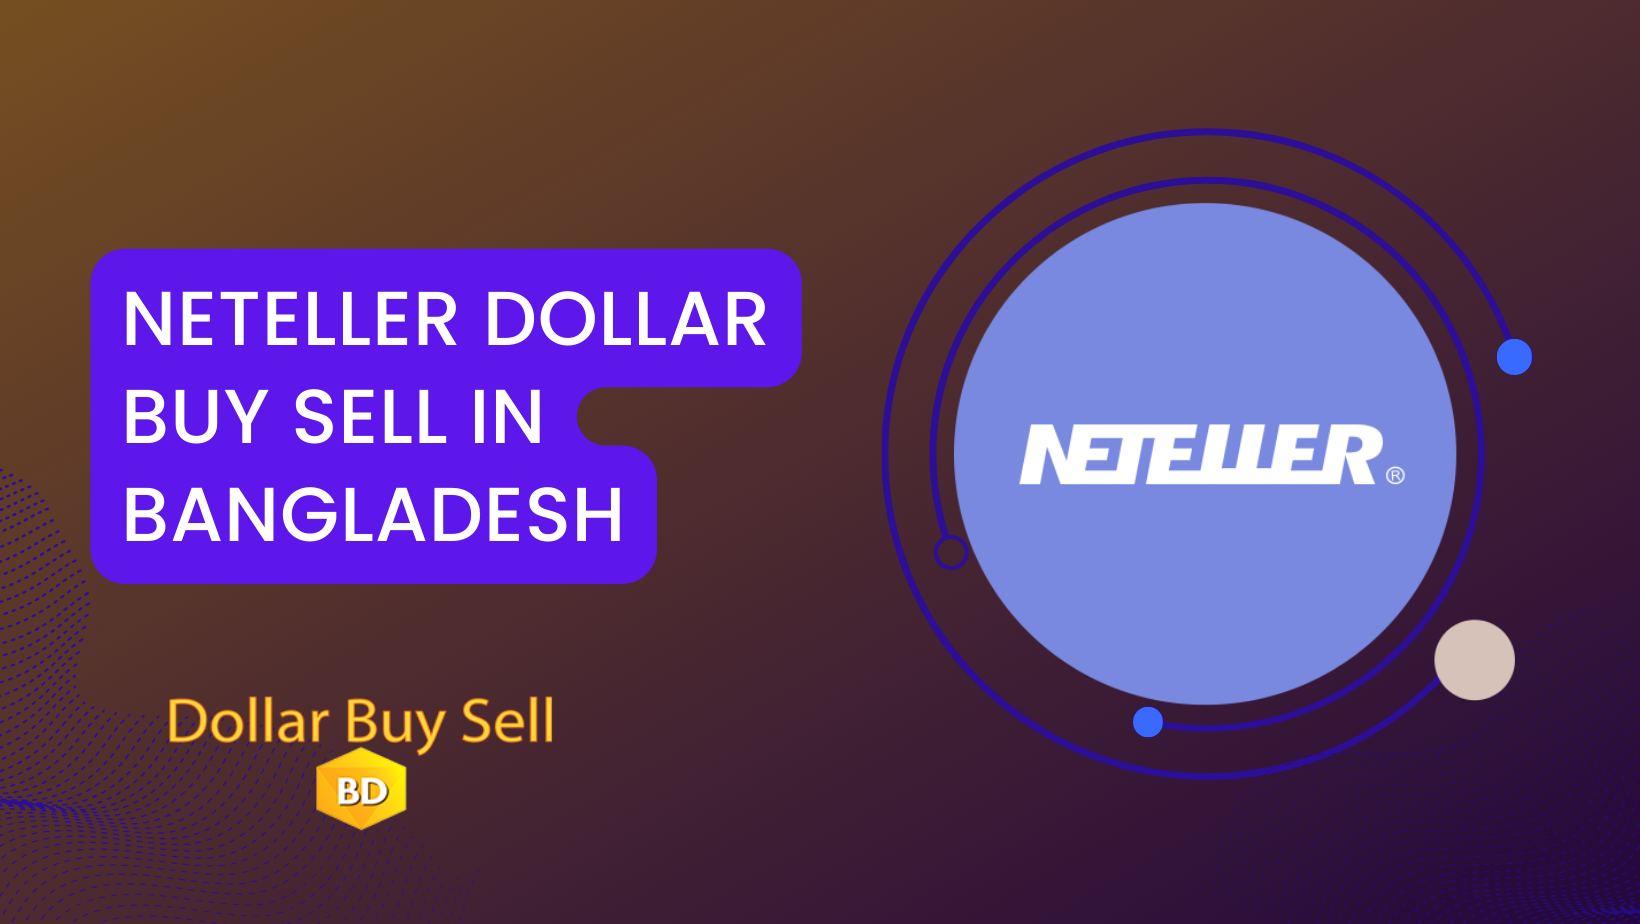 Neteller Dollar Buy and Sell from Bangladesh